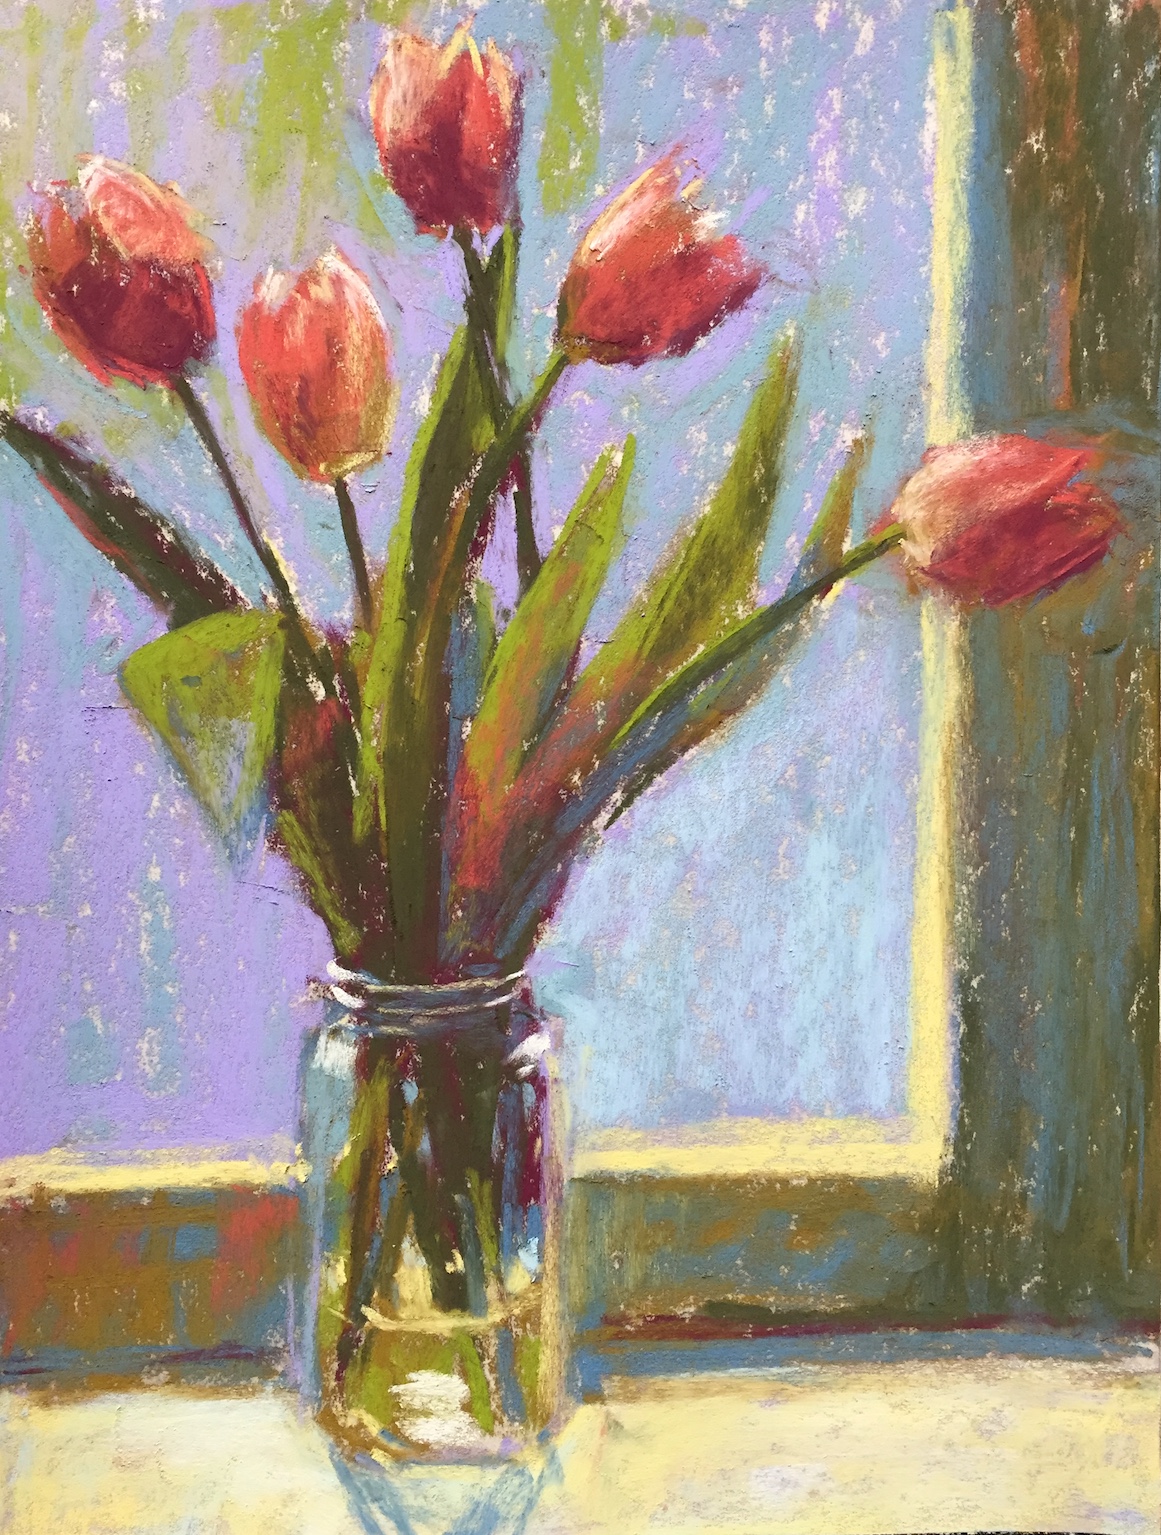 DK Project: Gail Sibley, Tulips 2, pastel, Unison pastels on UArt 500 paper, 12 x 9 in